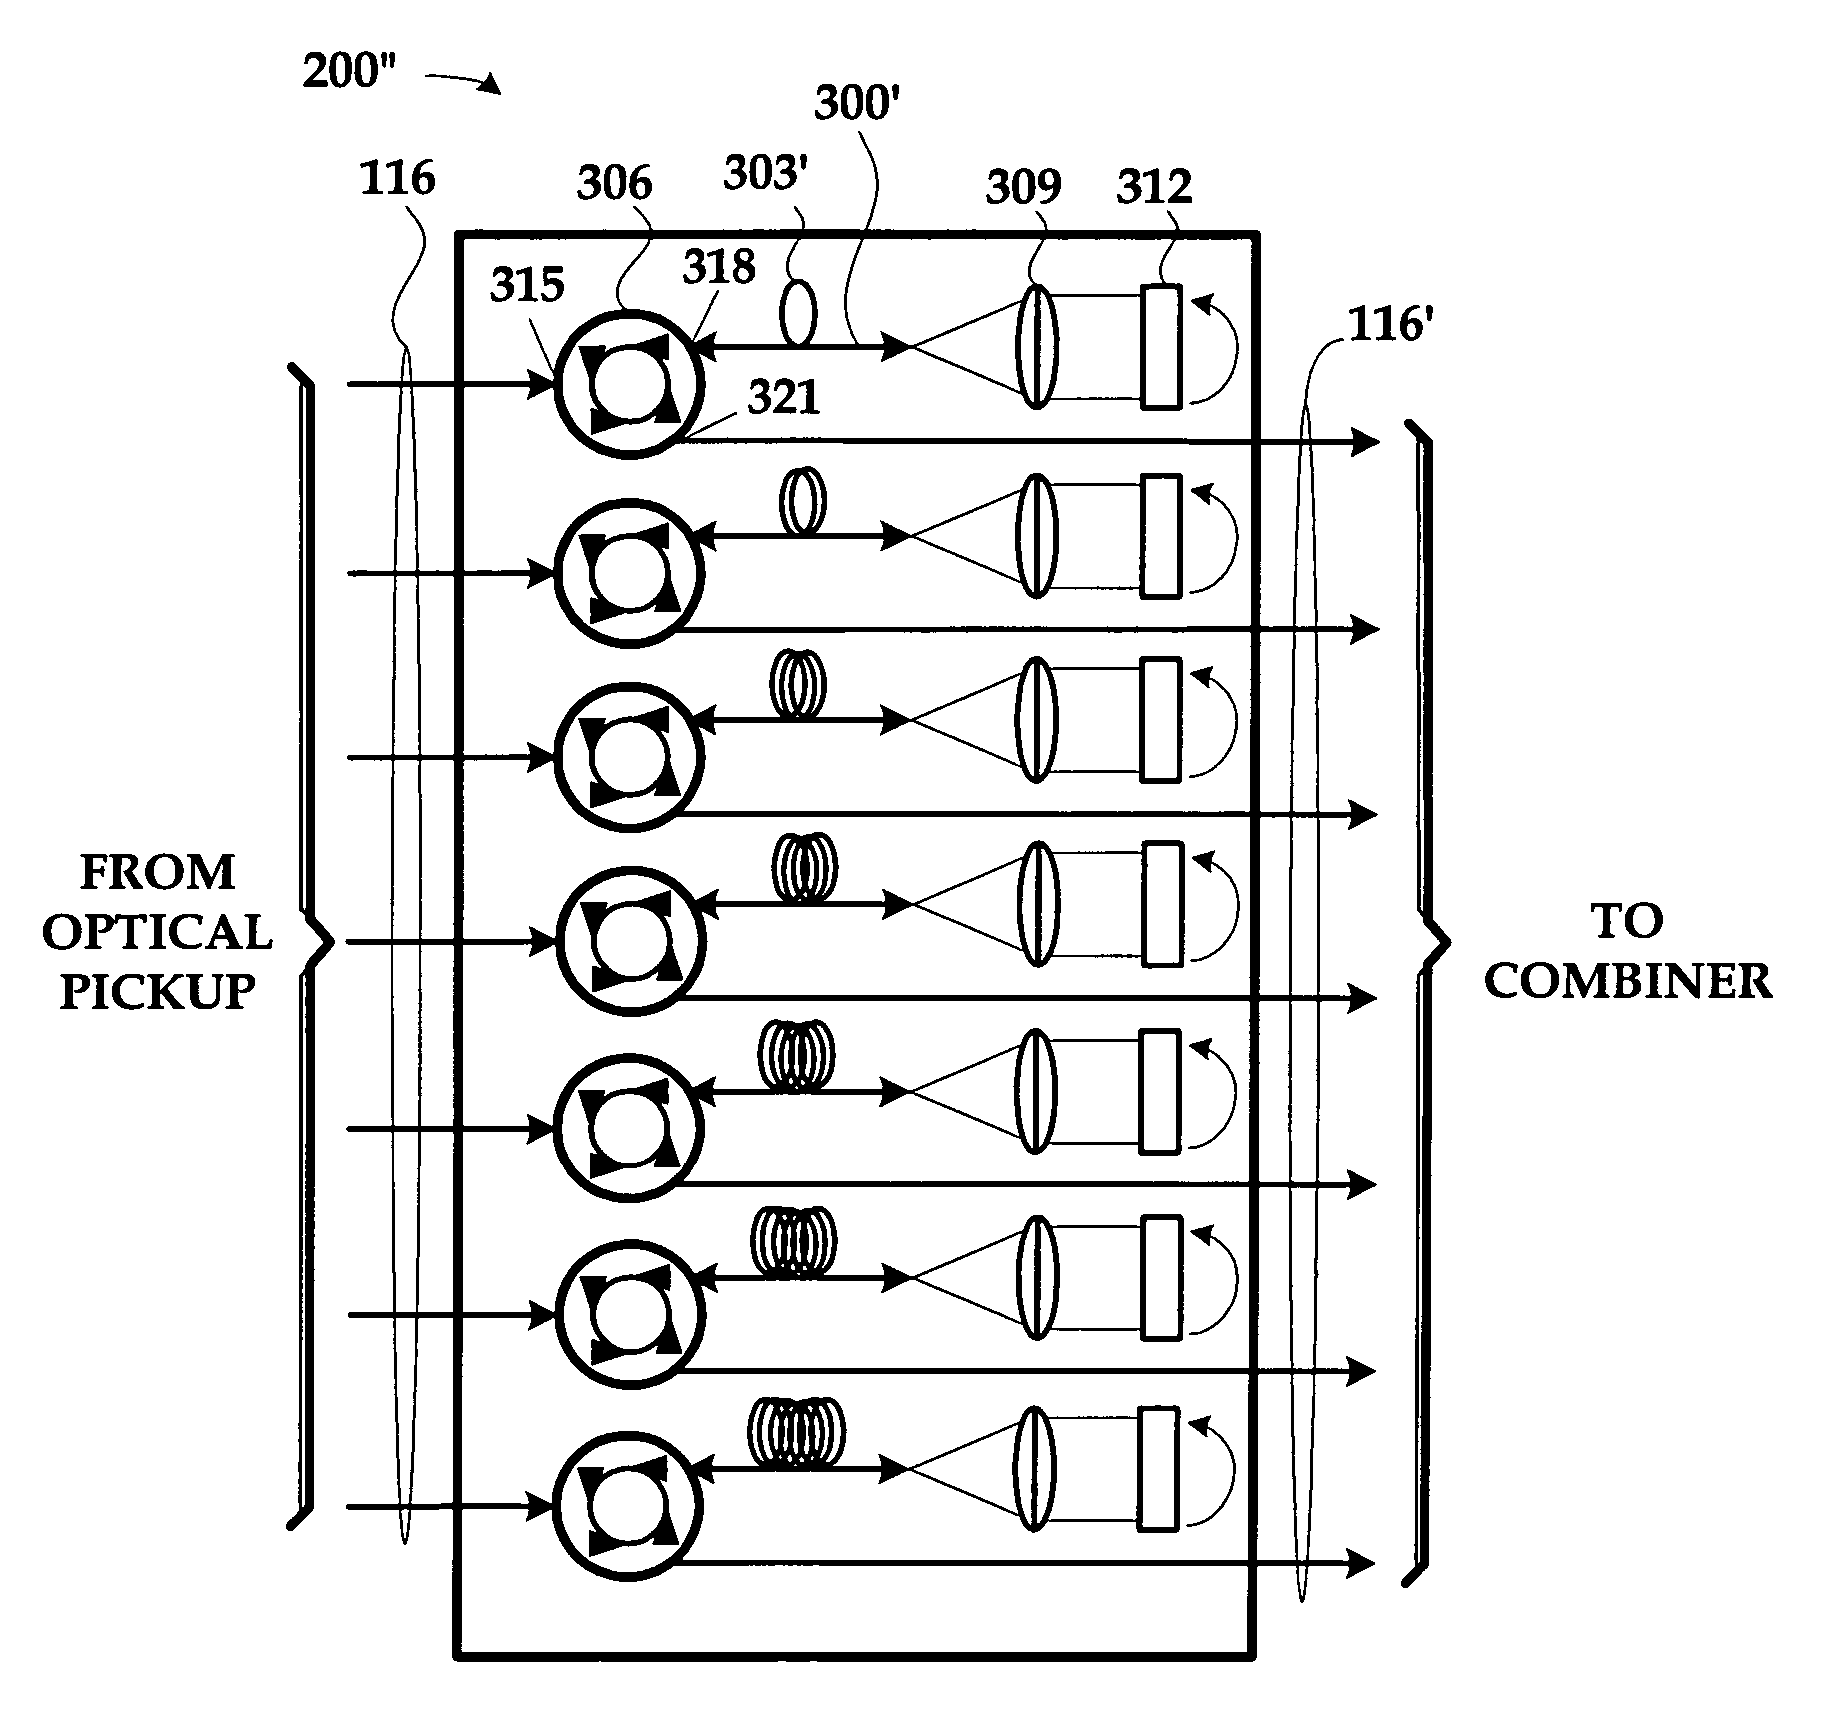 Single detector receiver for multi-beam LADAR systems